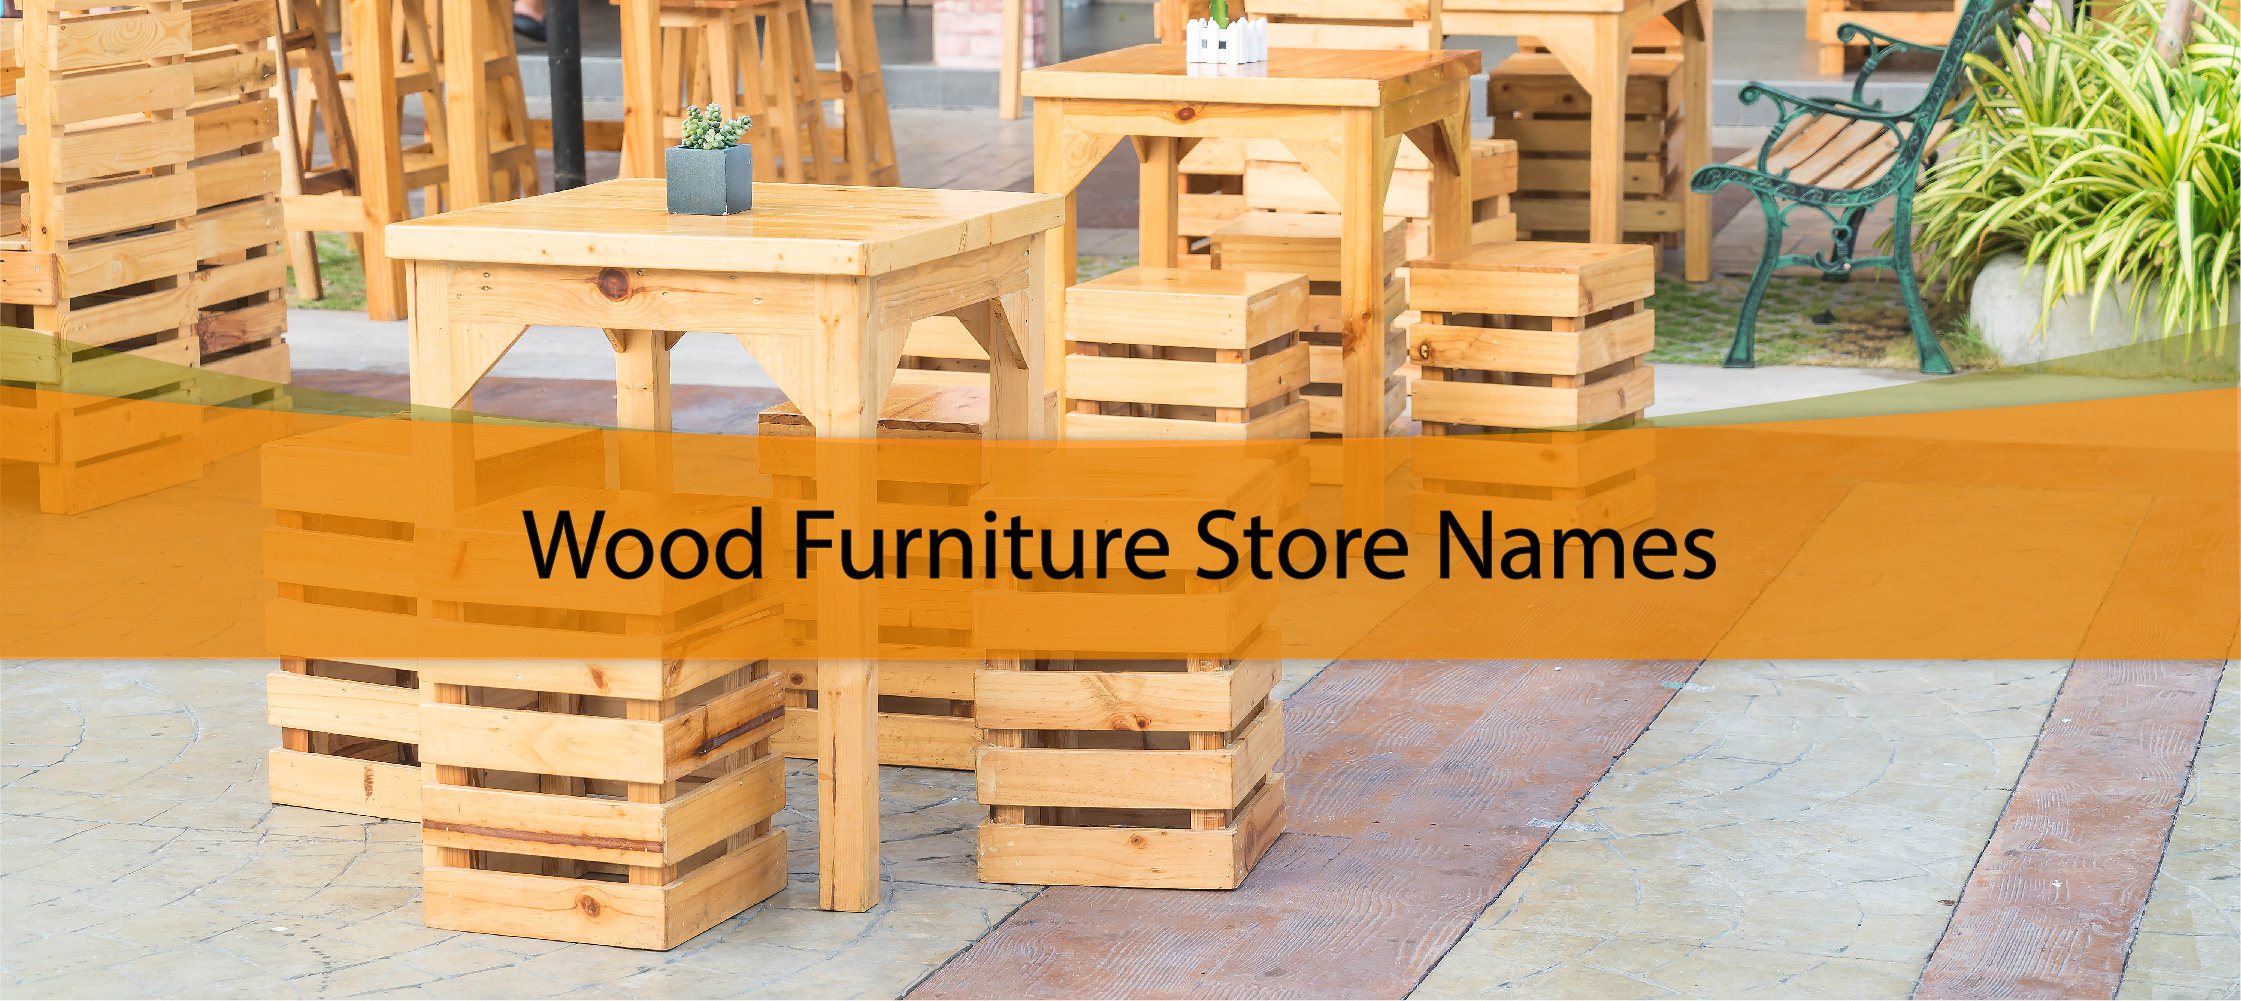 Wood Furniture Store Names